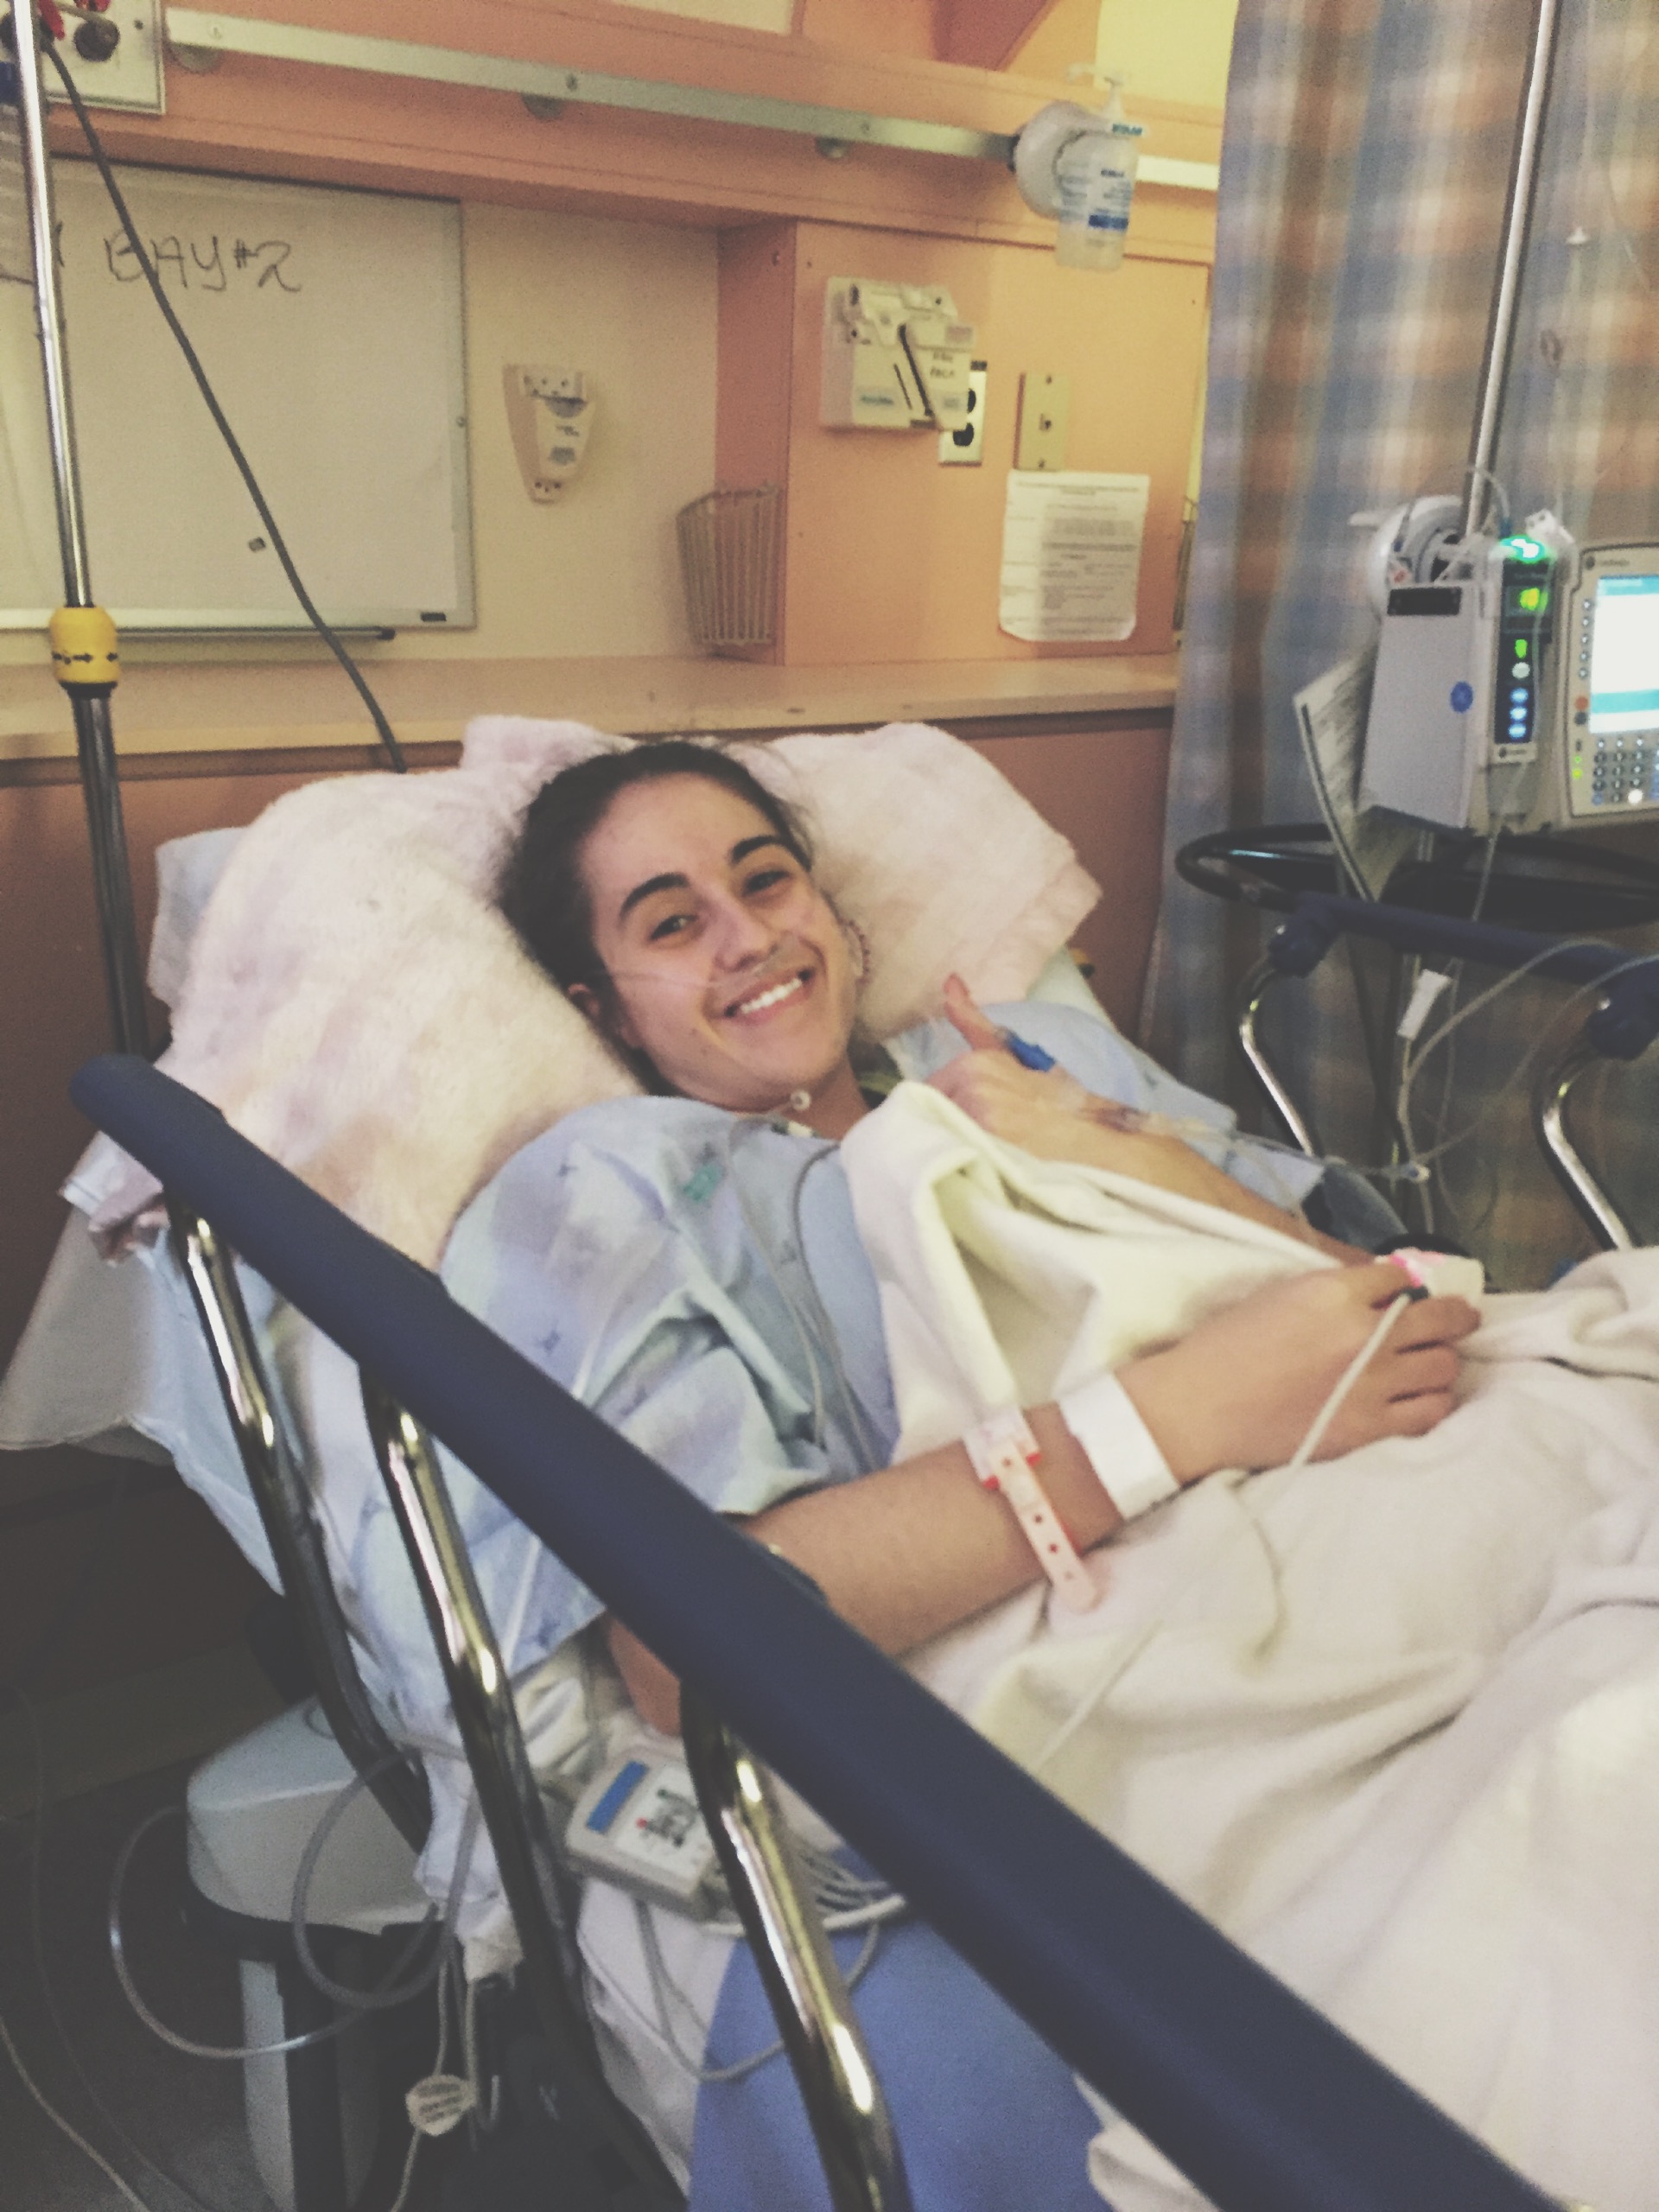 girl smiling in hospital bed